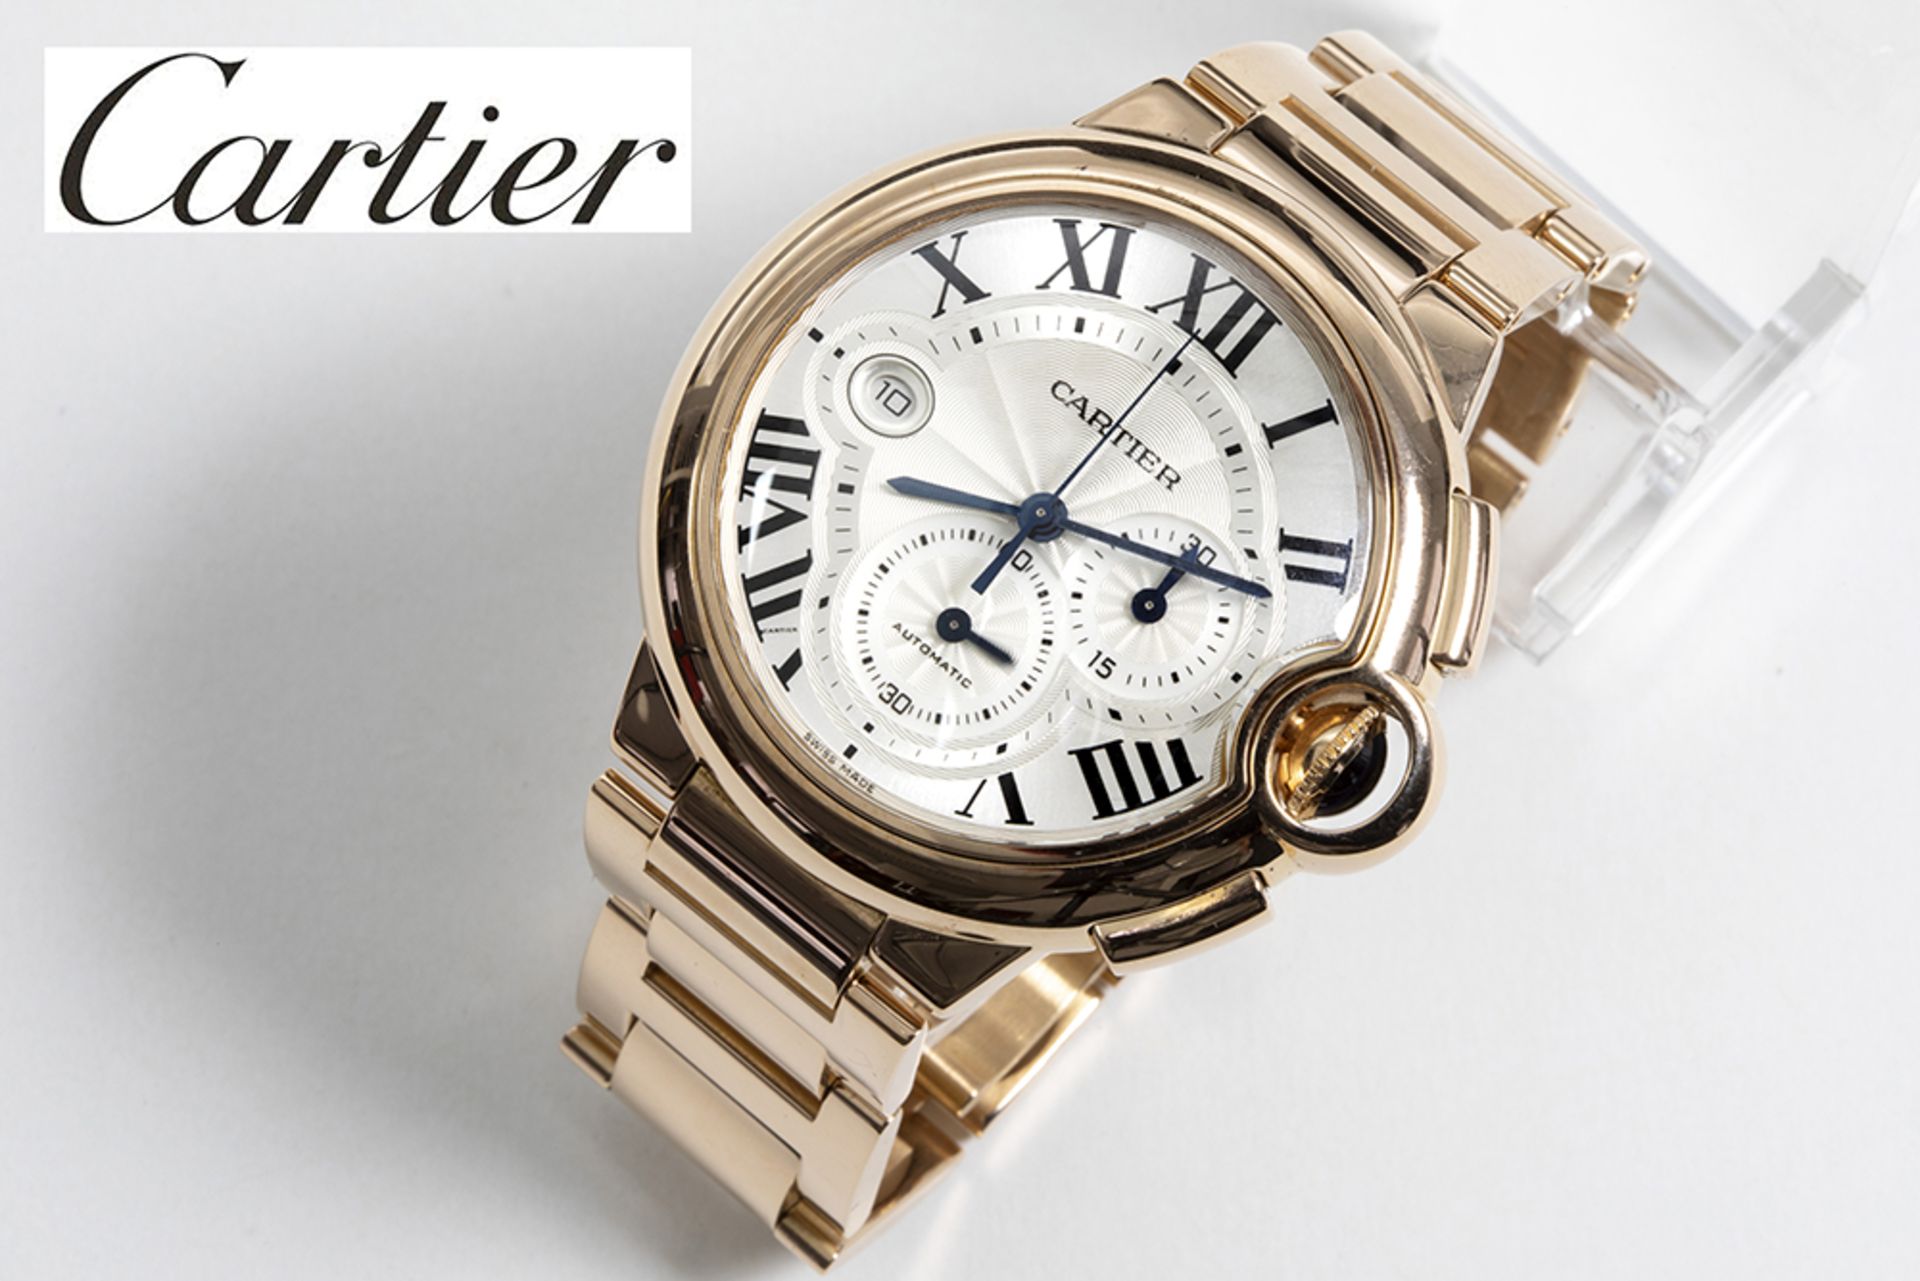 completely original chronograph automatique "Cartier Ballon bleu" wristwatch in pink gold (18 carat)